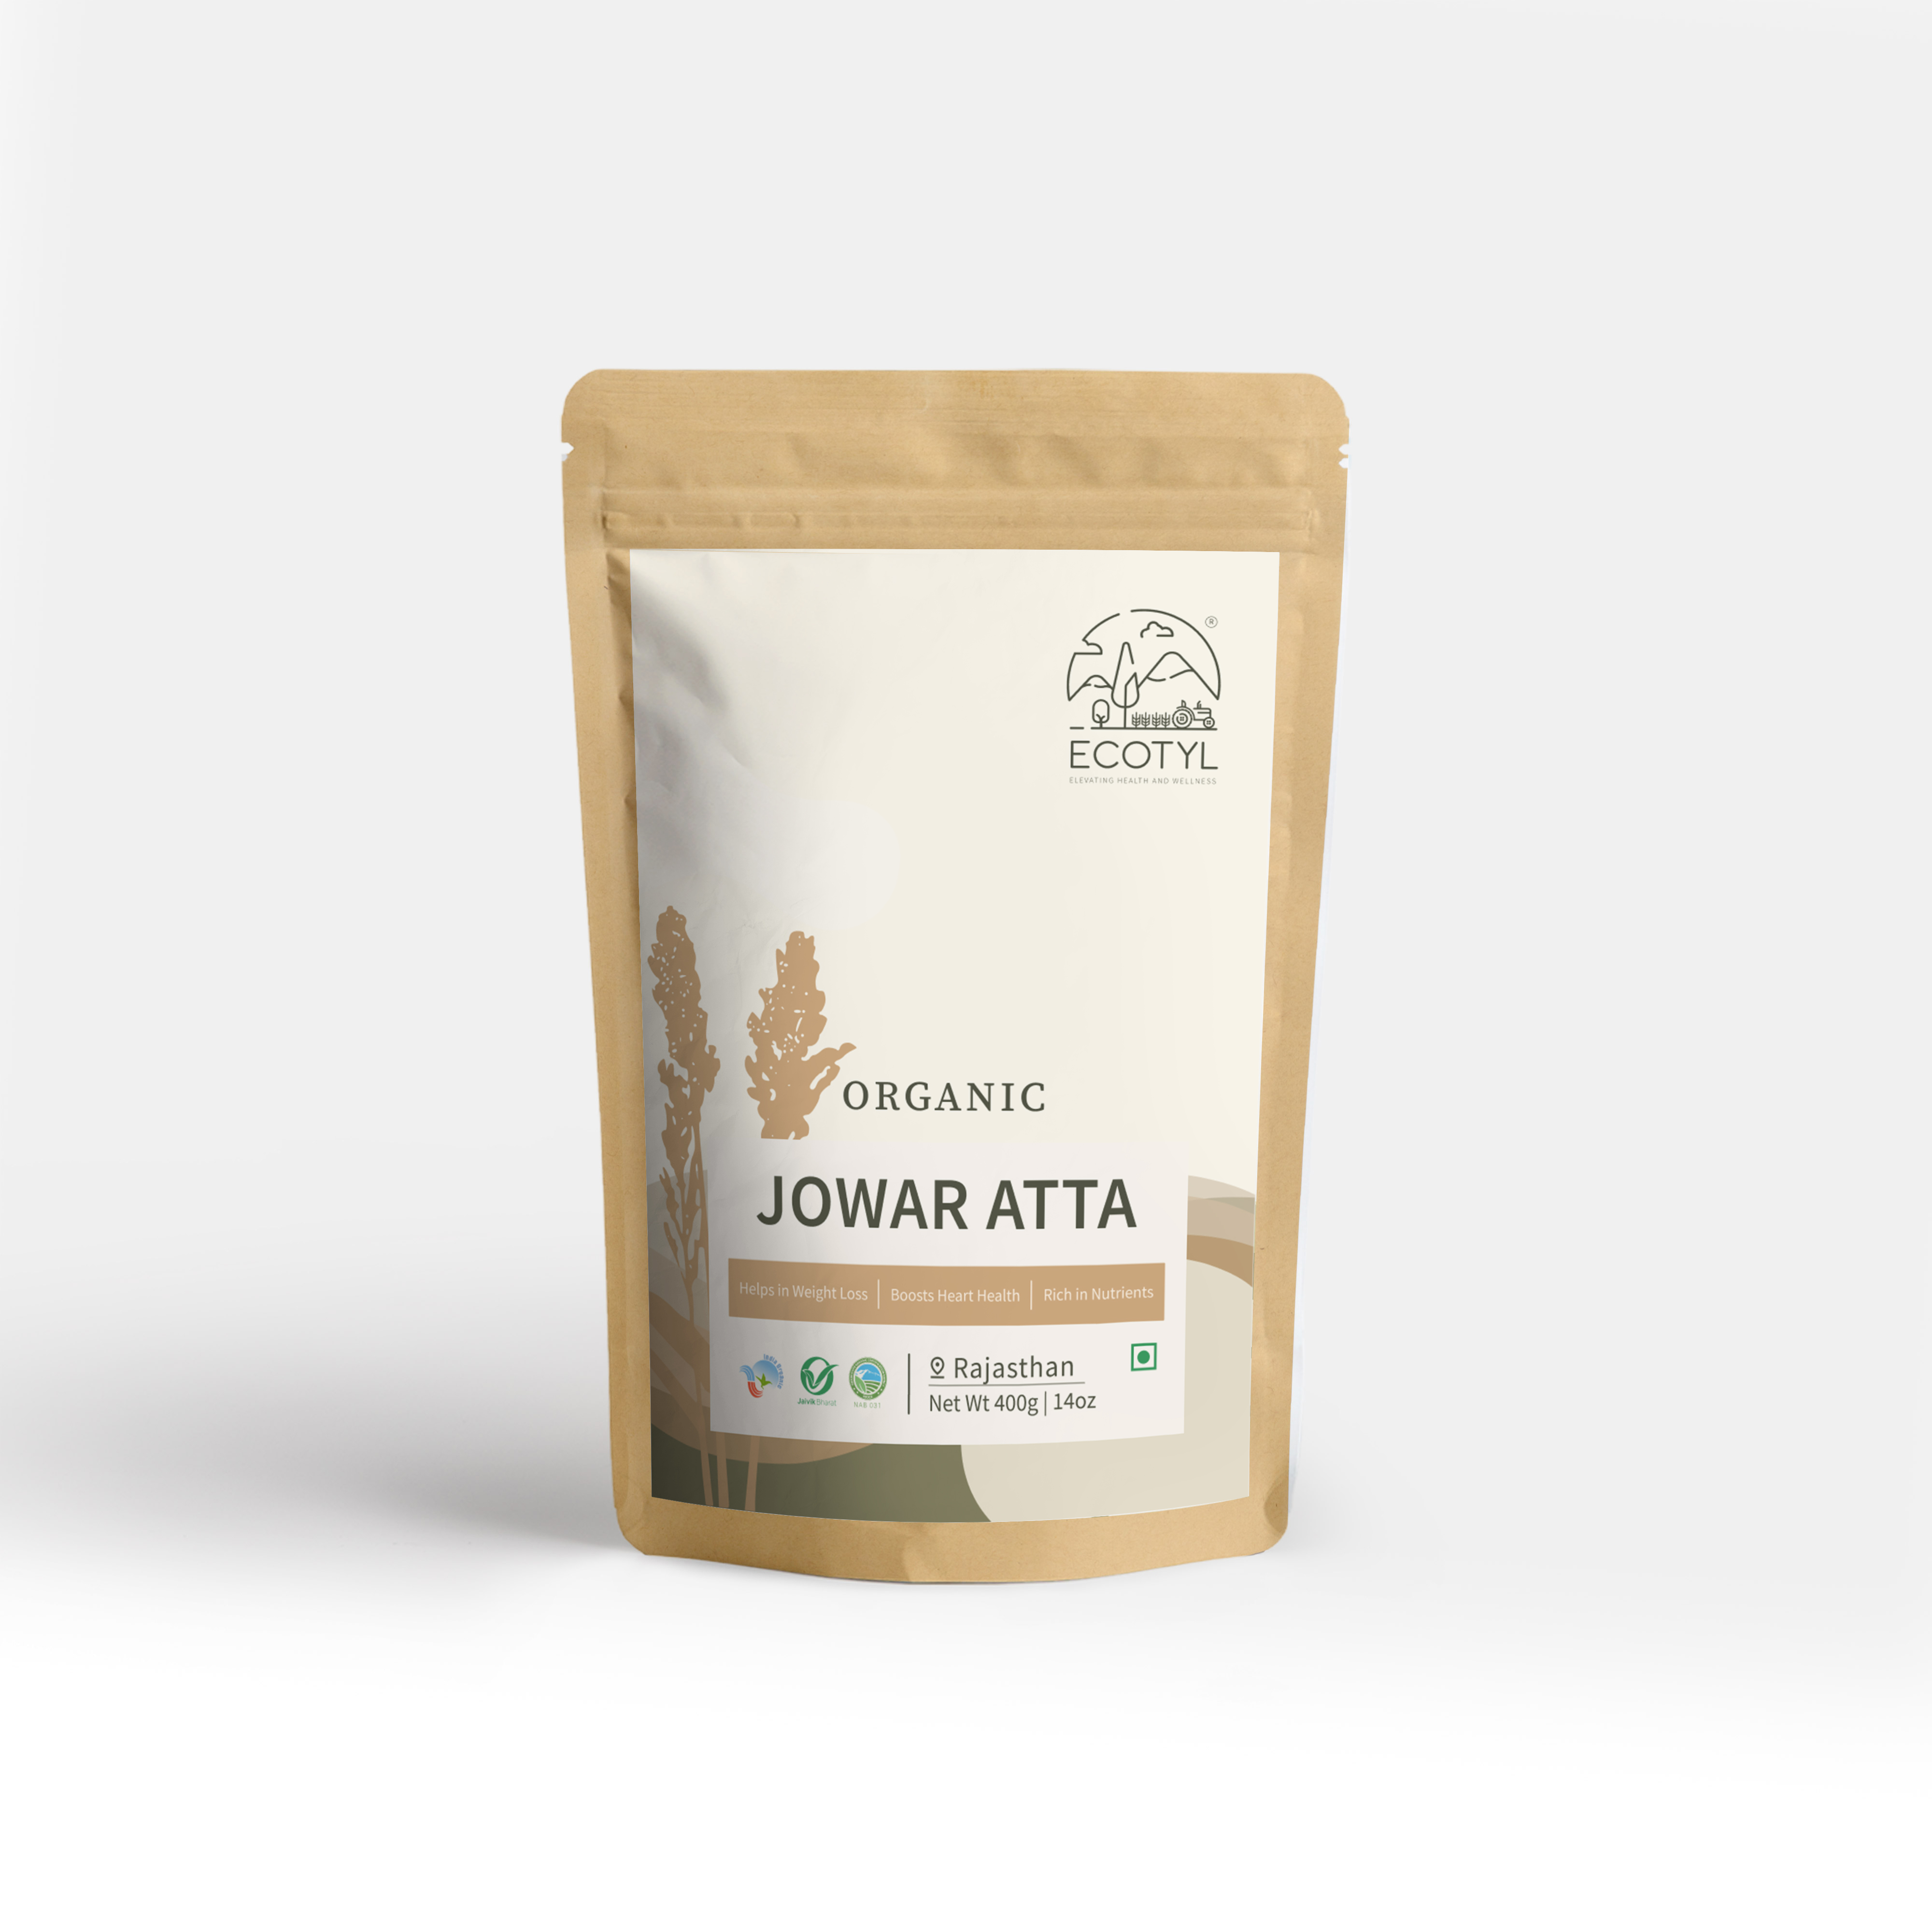 Buy Ecotyl Organic Jowar Atta - 400 g at Best Price Online